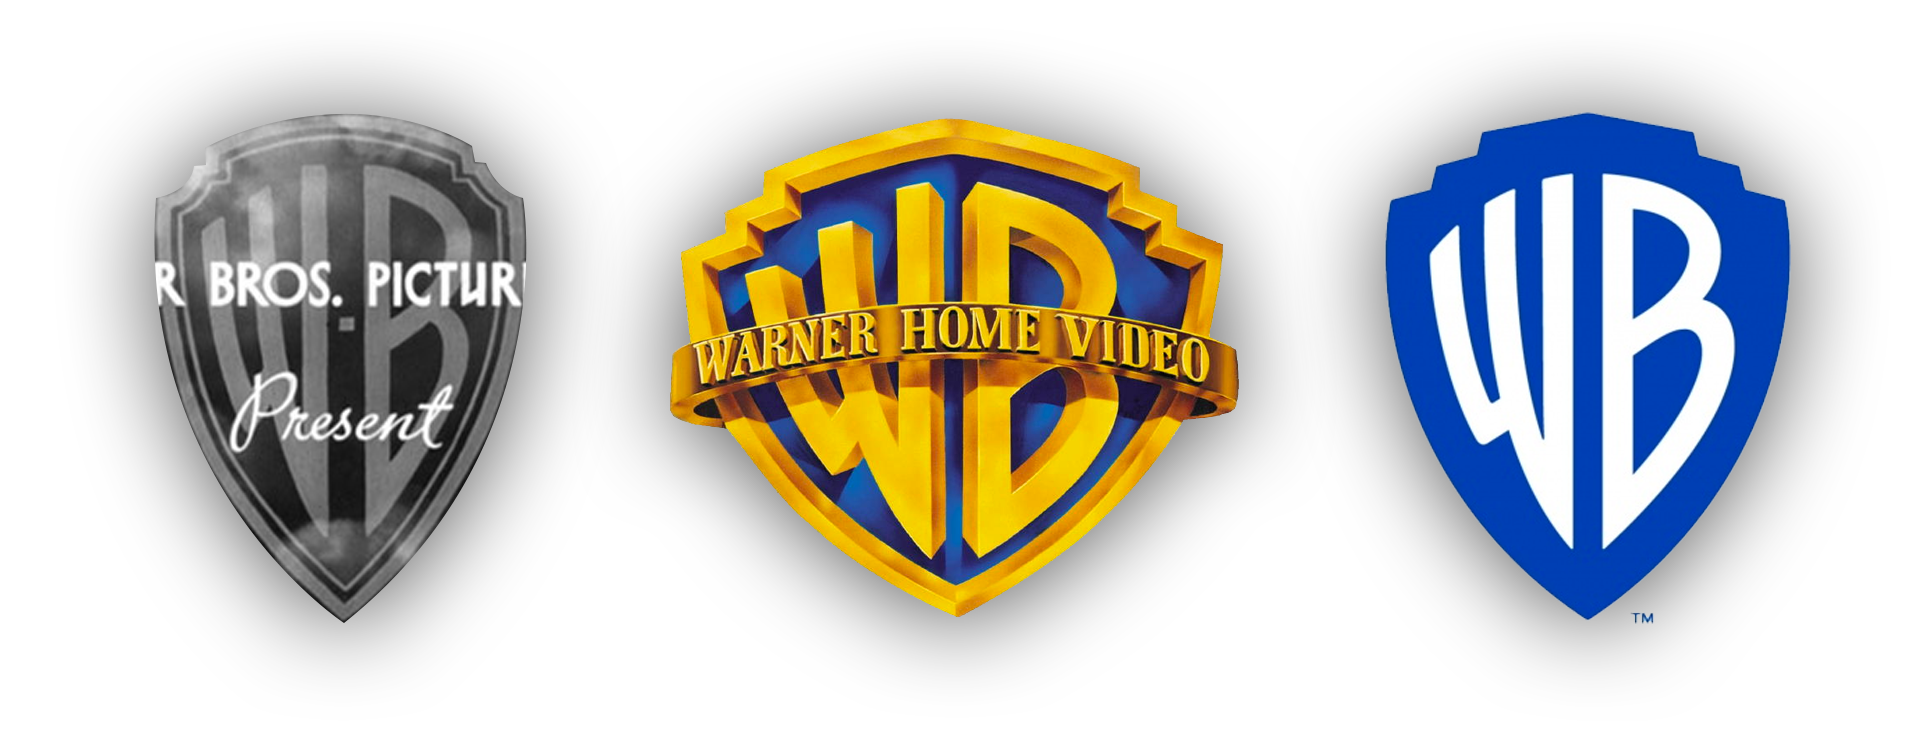 Warner Bros.' Logos over its lifetime